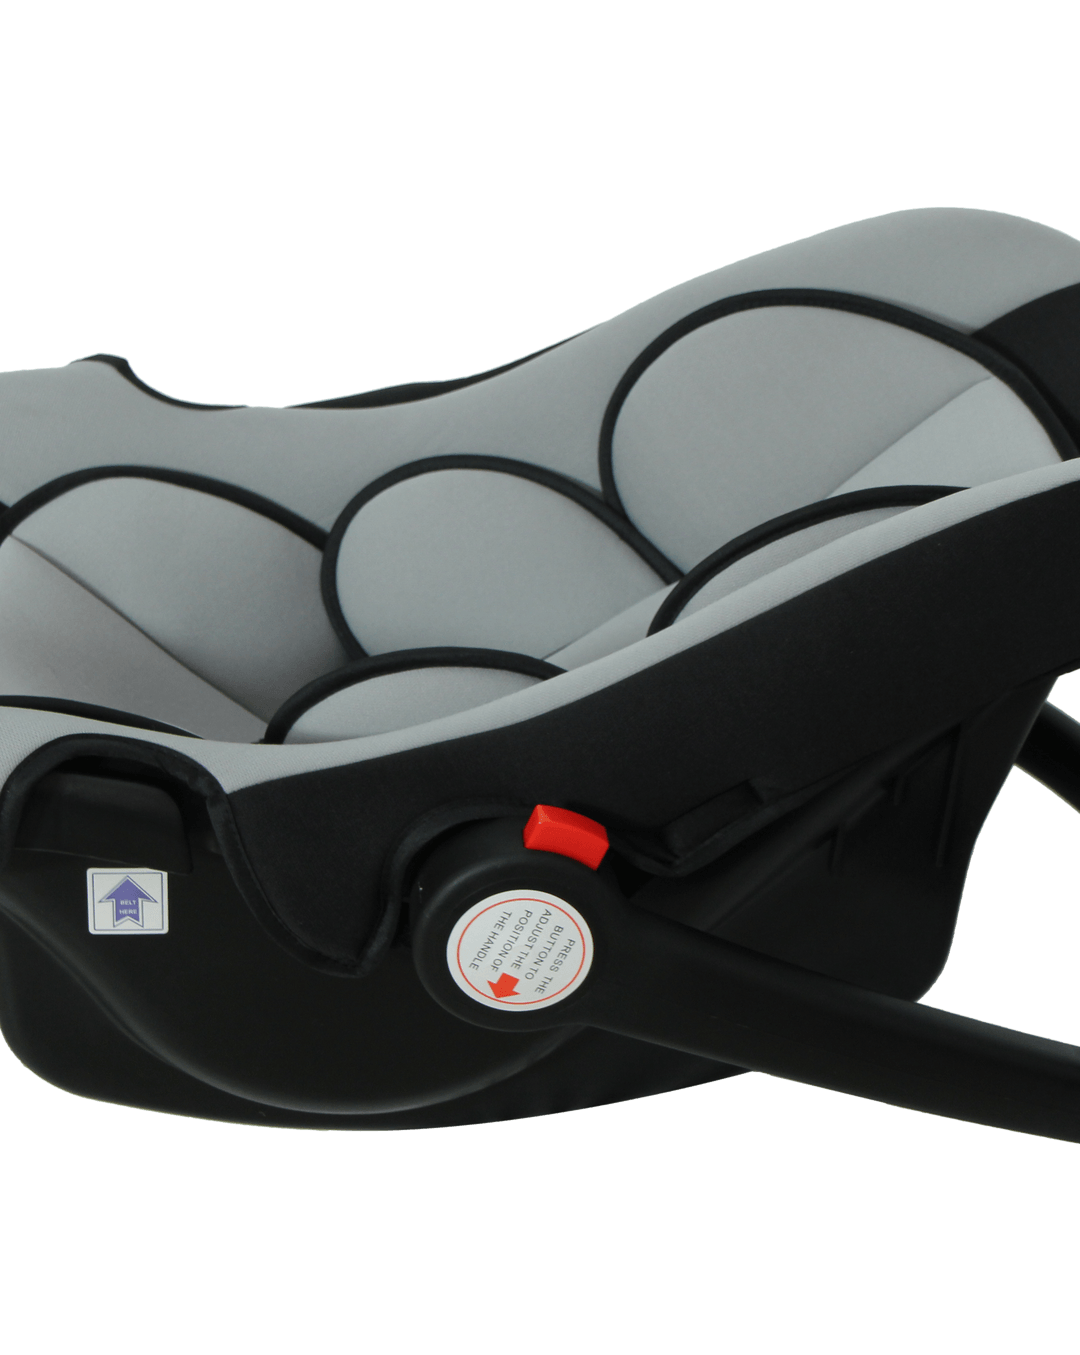 Buy R for Rabbit Baby Car Seats Online